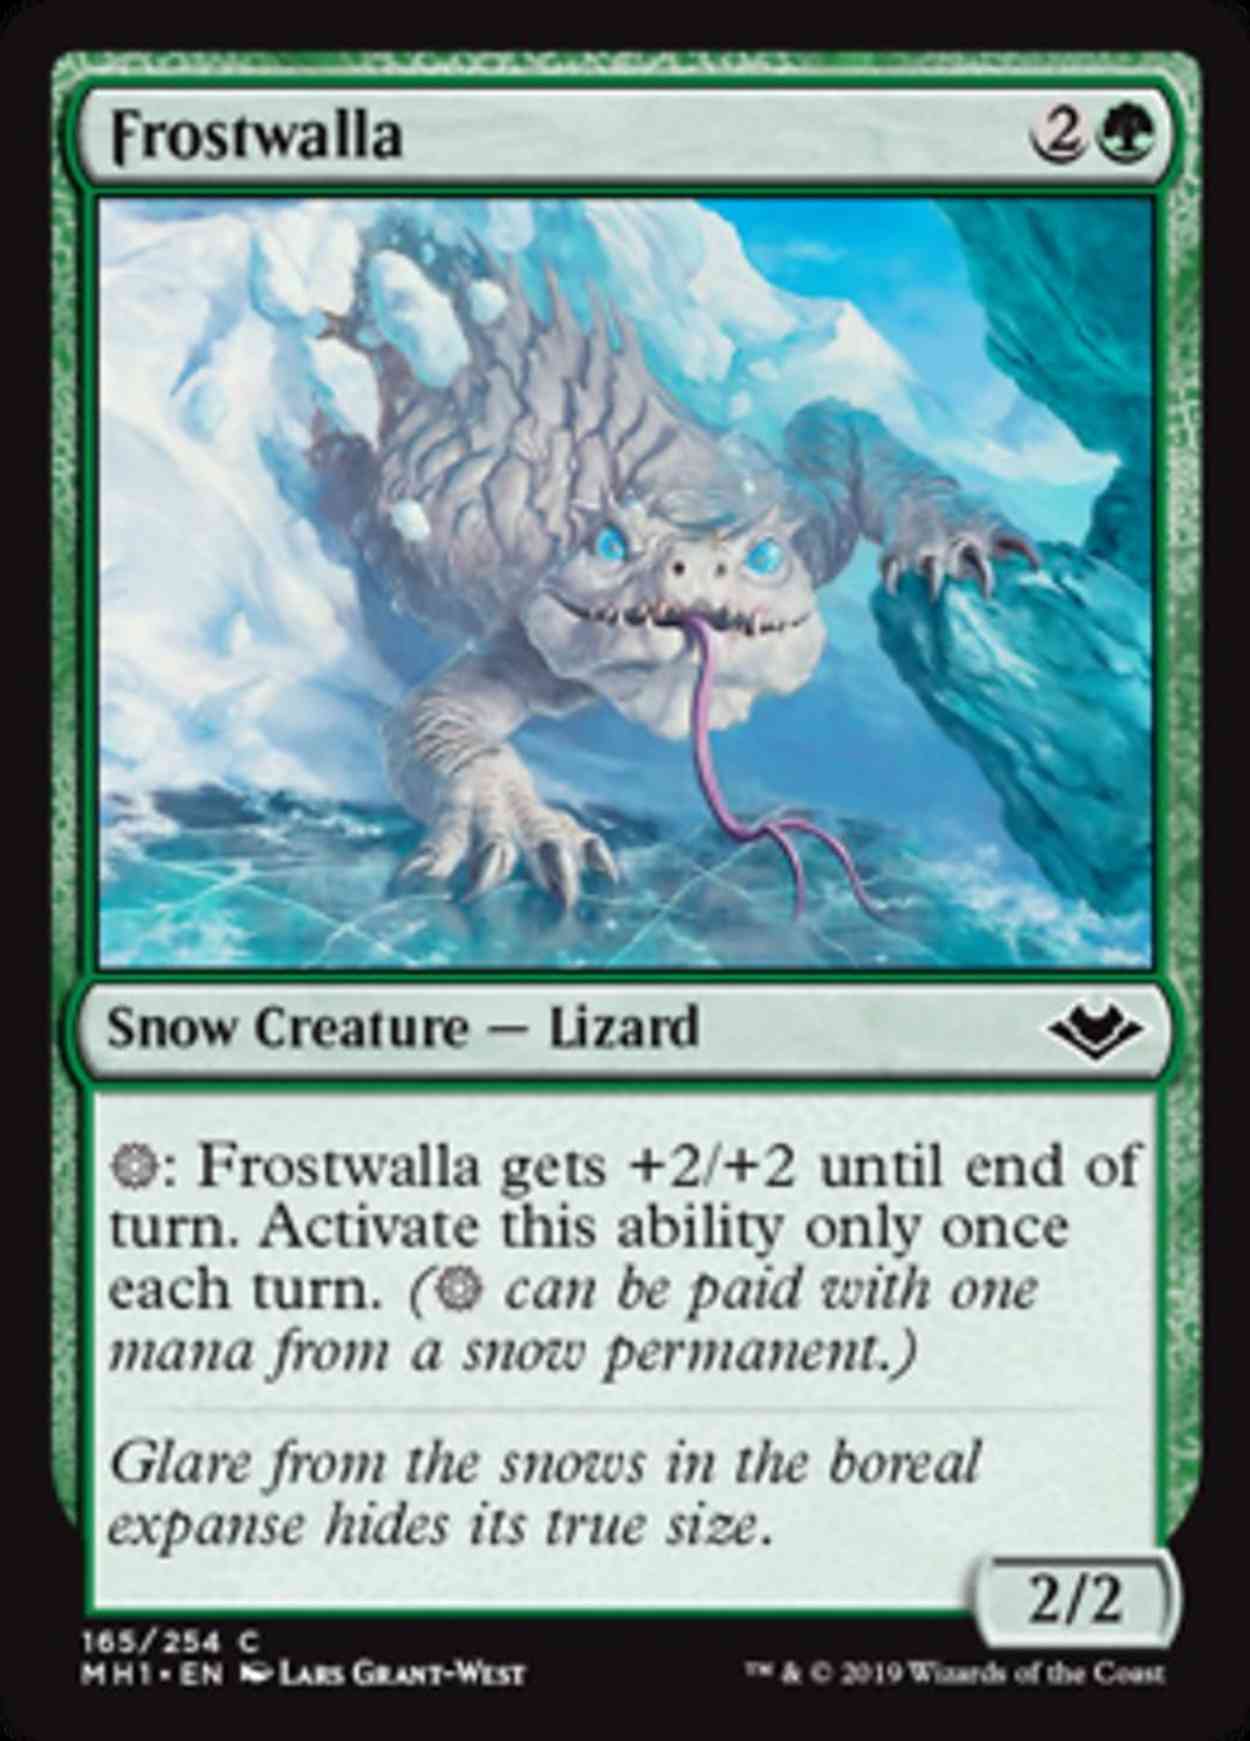 Frostwalla magic card front